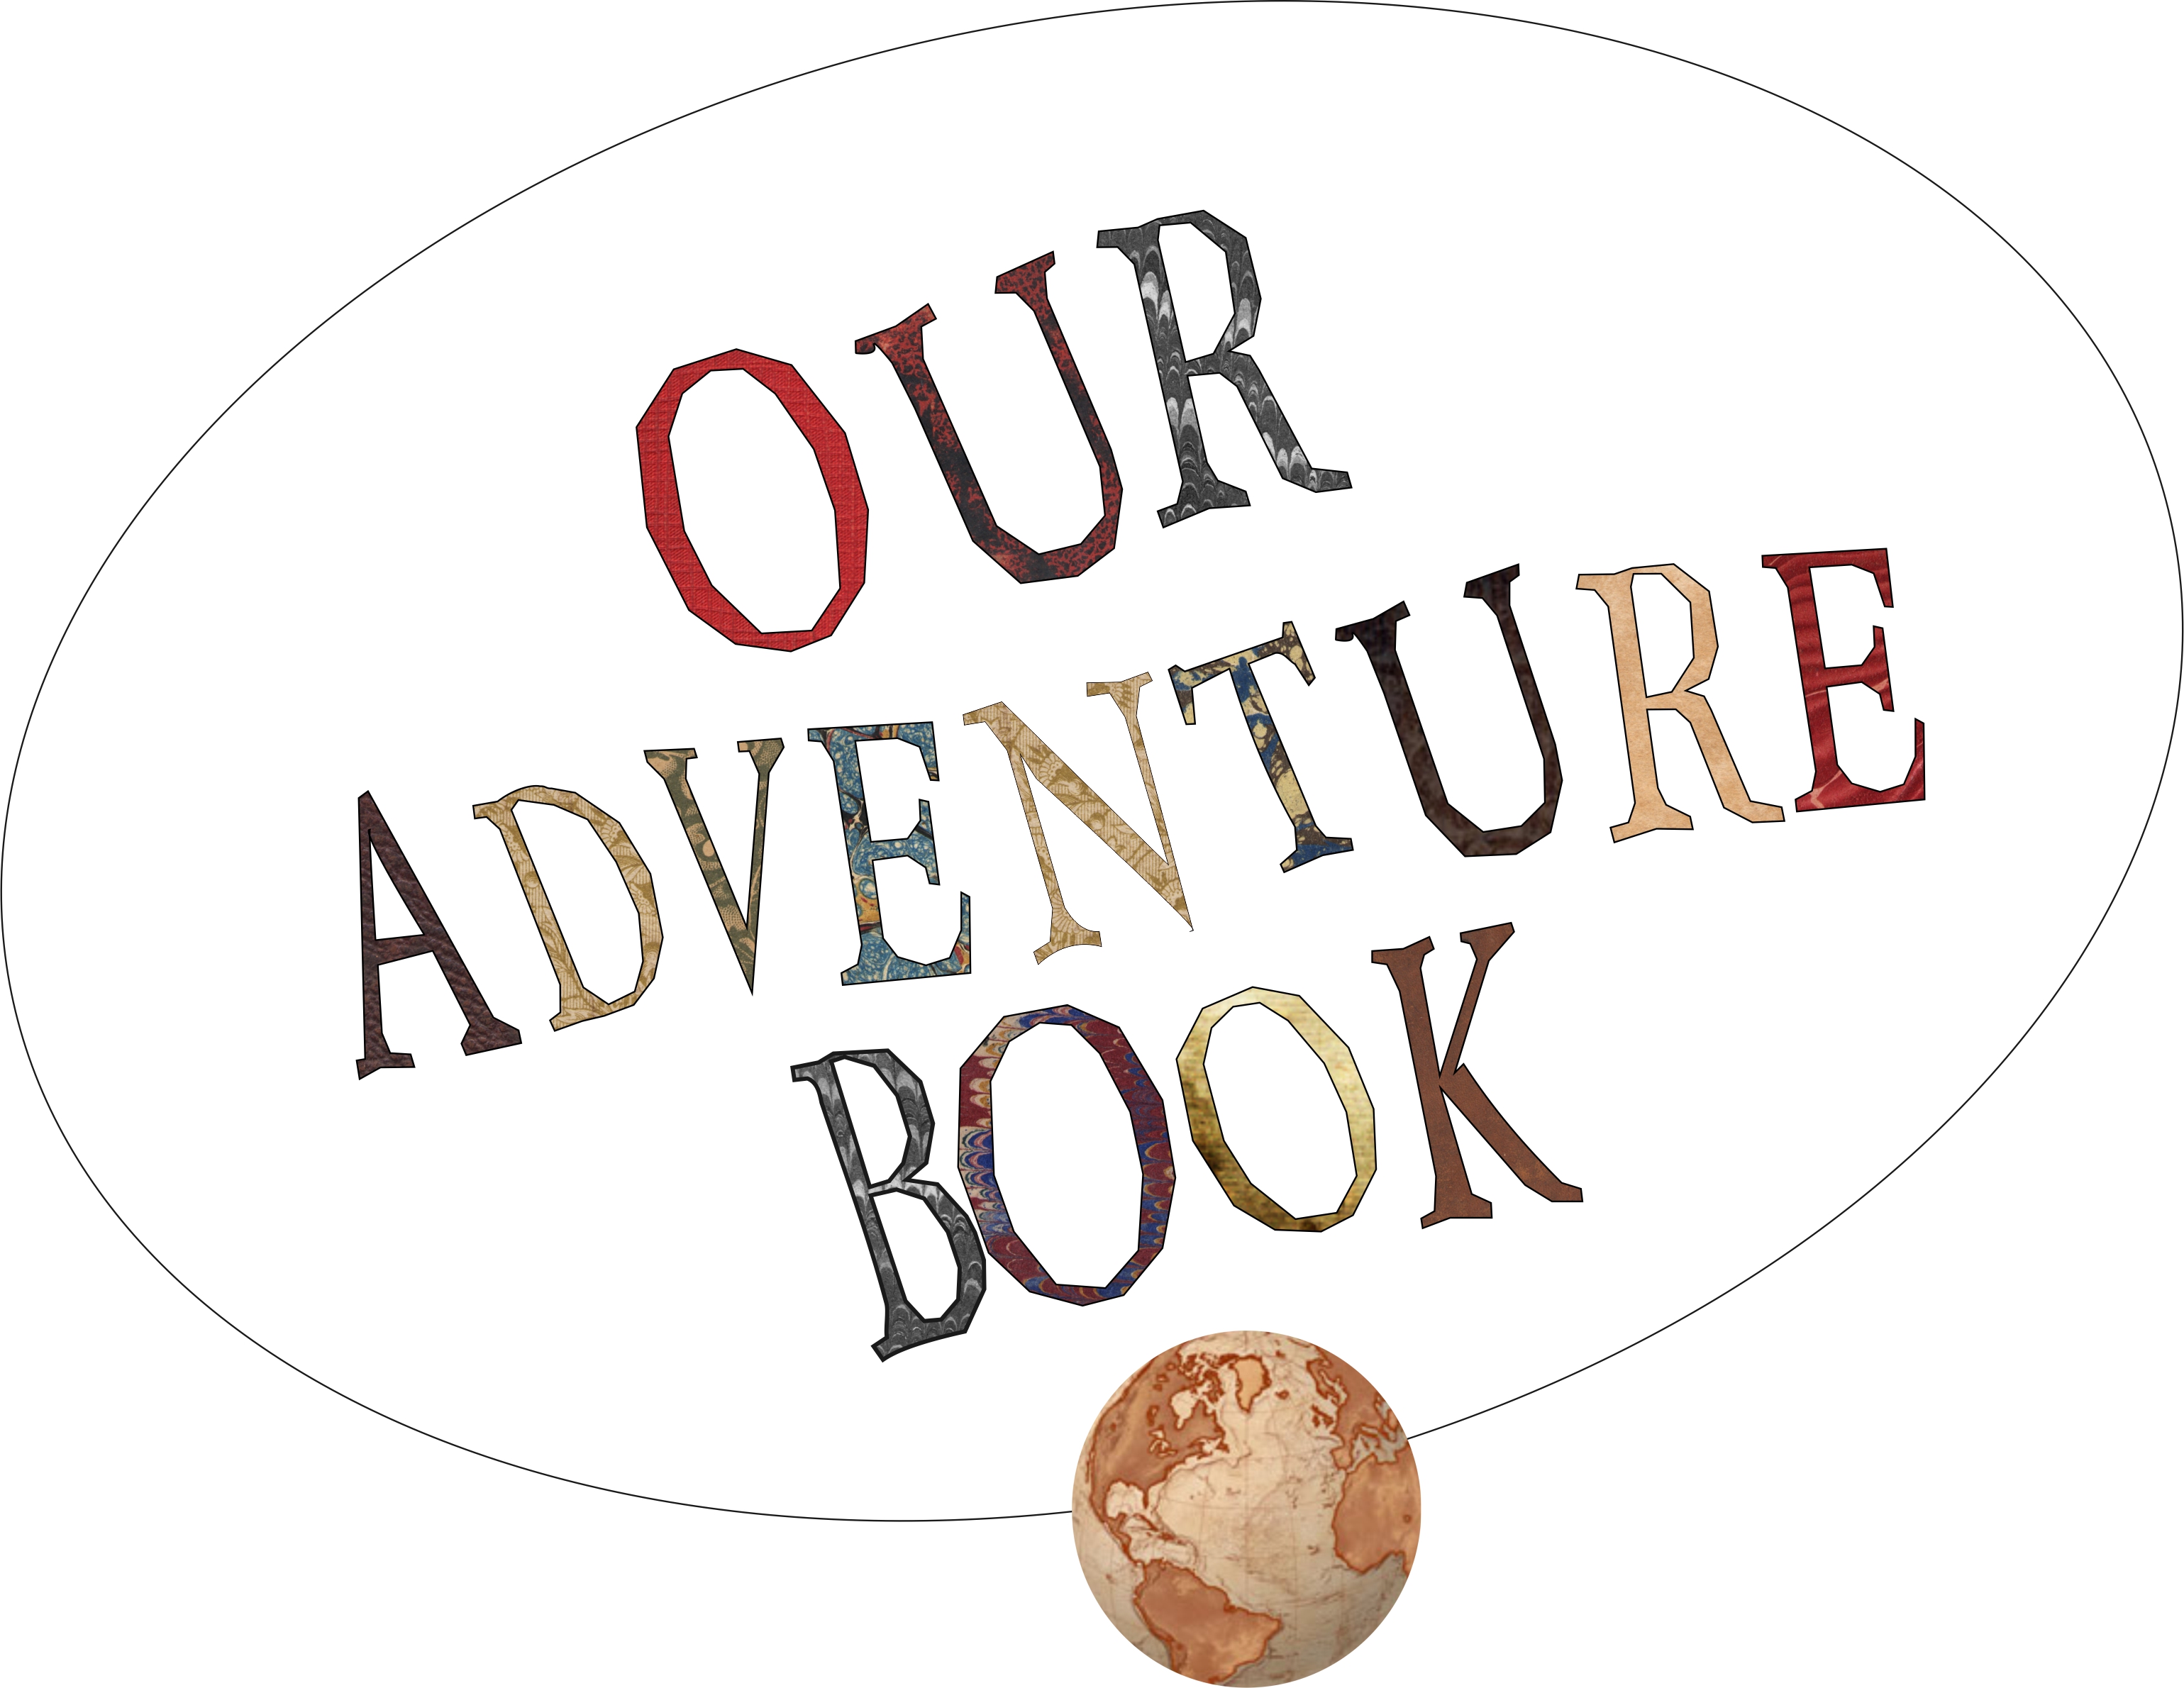 Our Adventure Book by maichan-art on DeviantArt